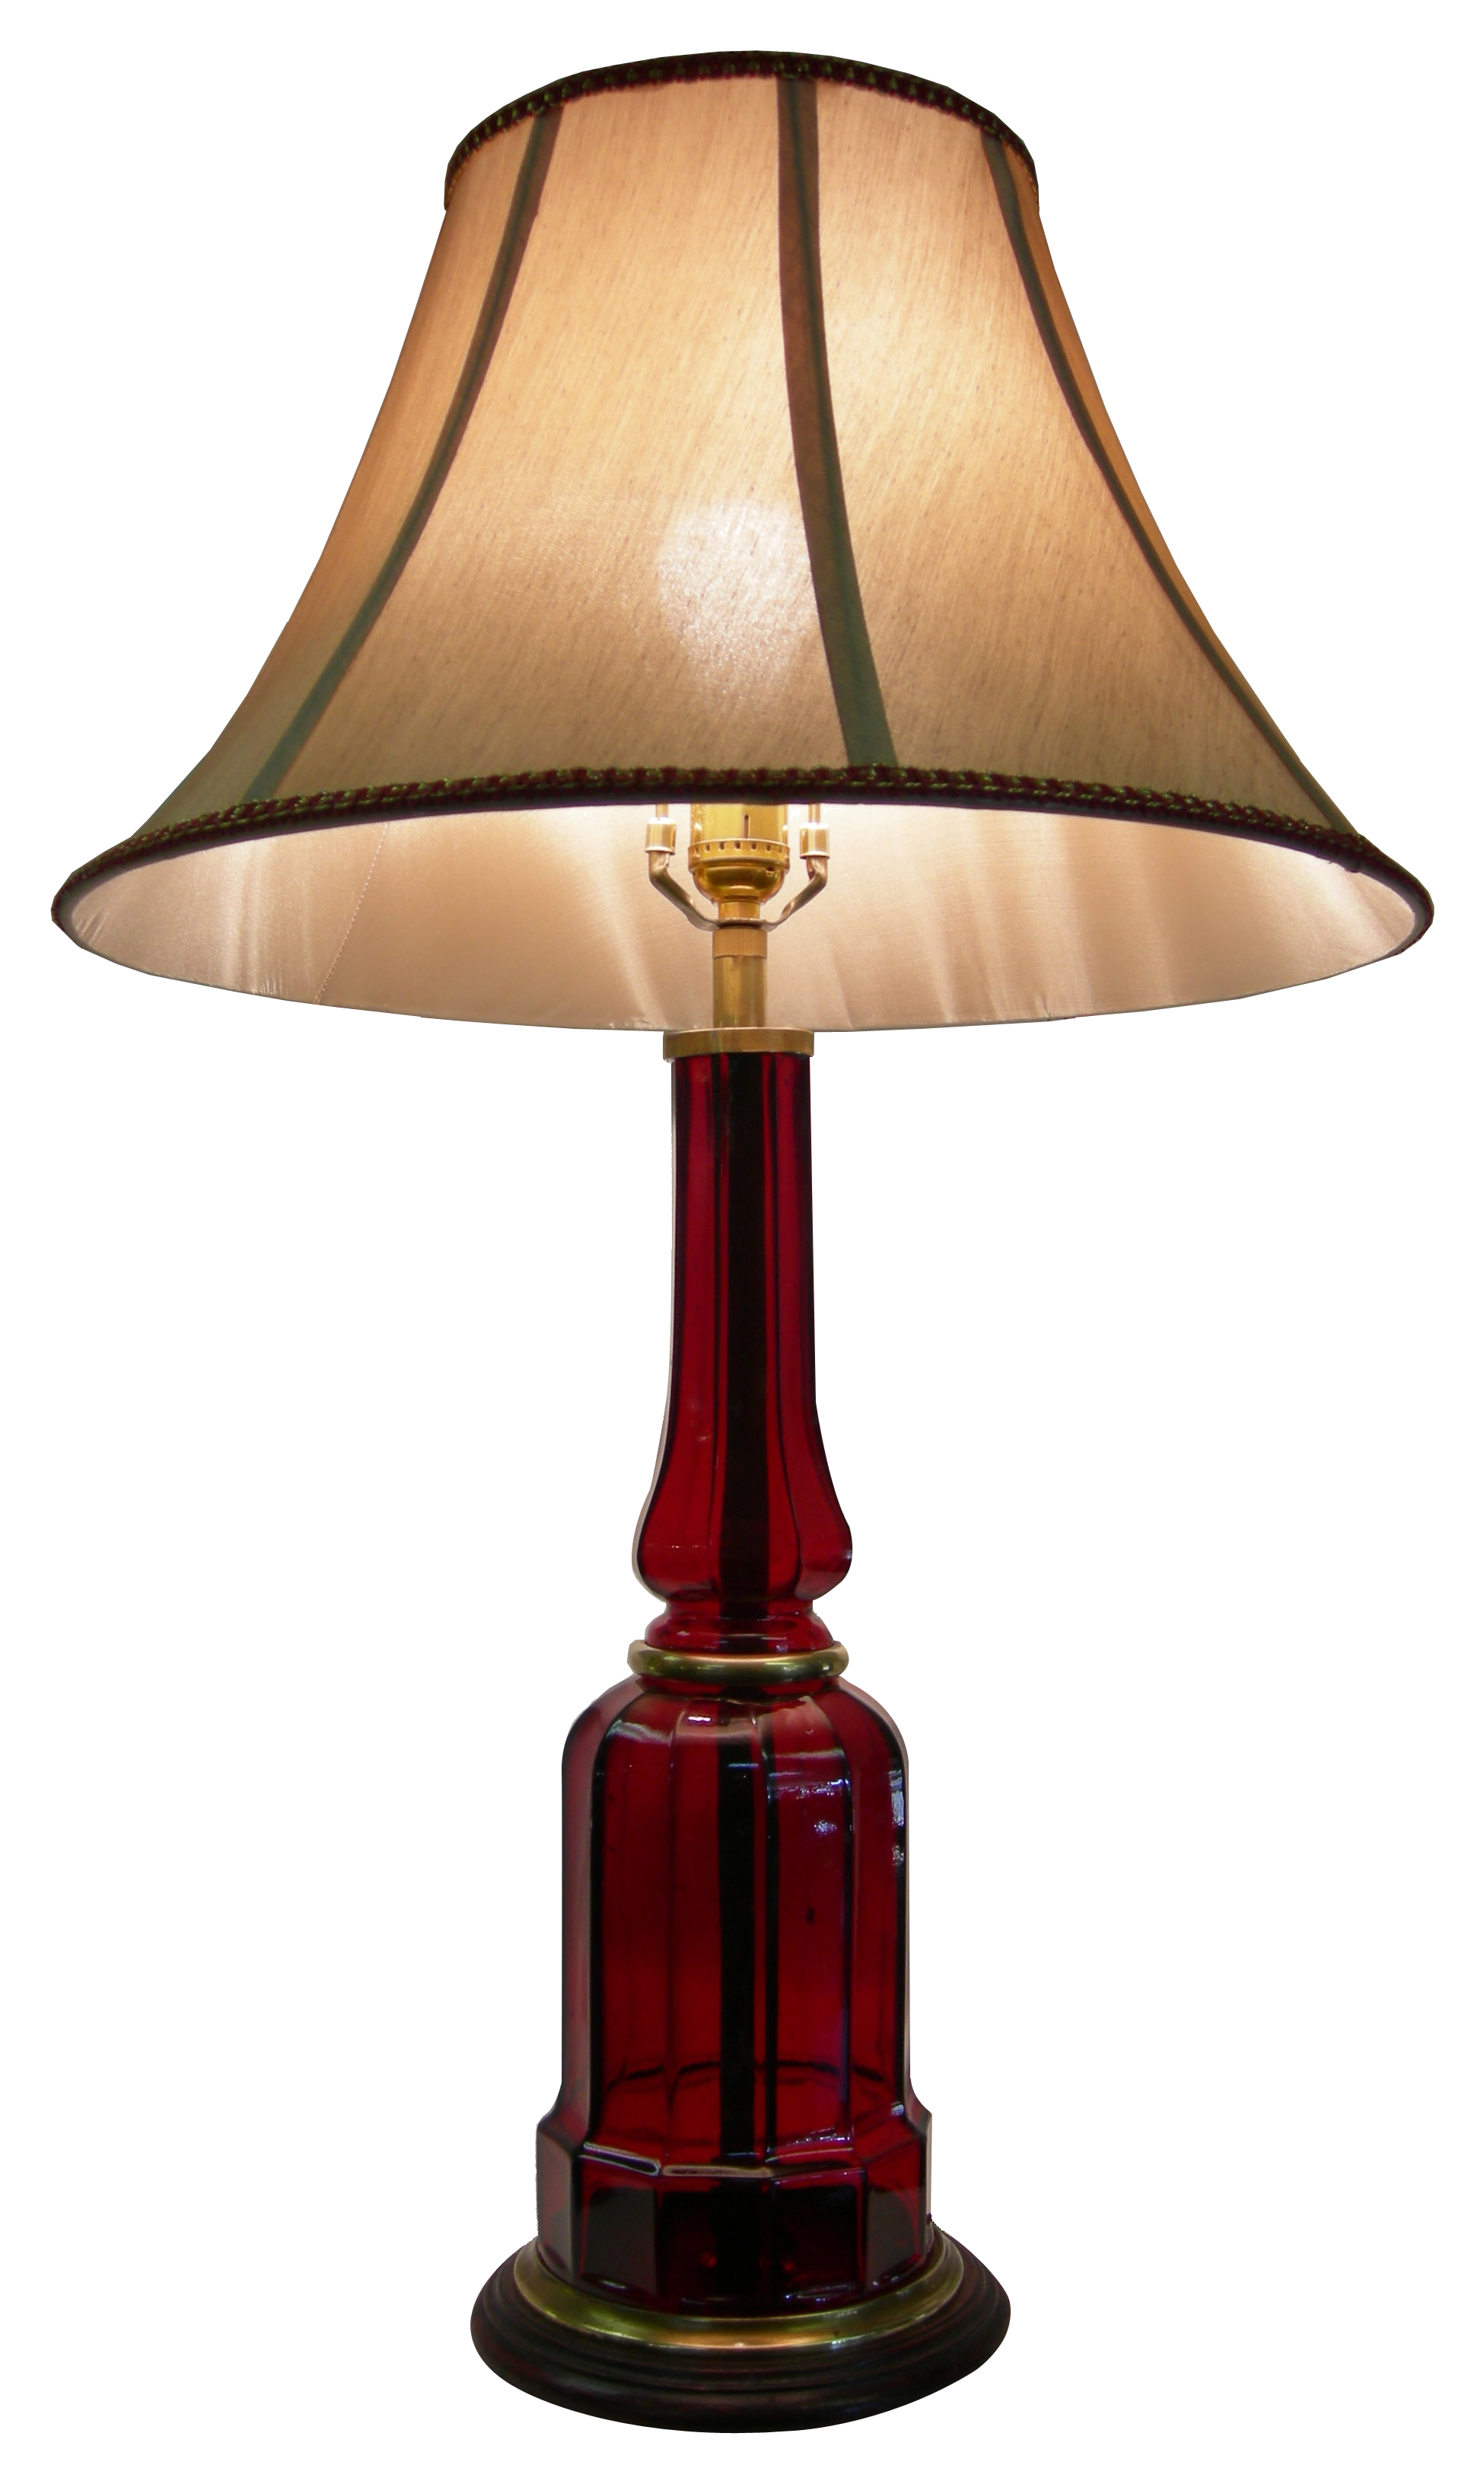 PNG Lamp Transparent Lamp.PNG Images. | PlusPNG